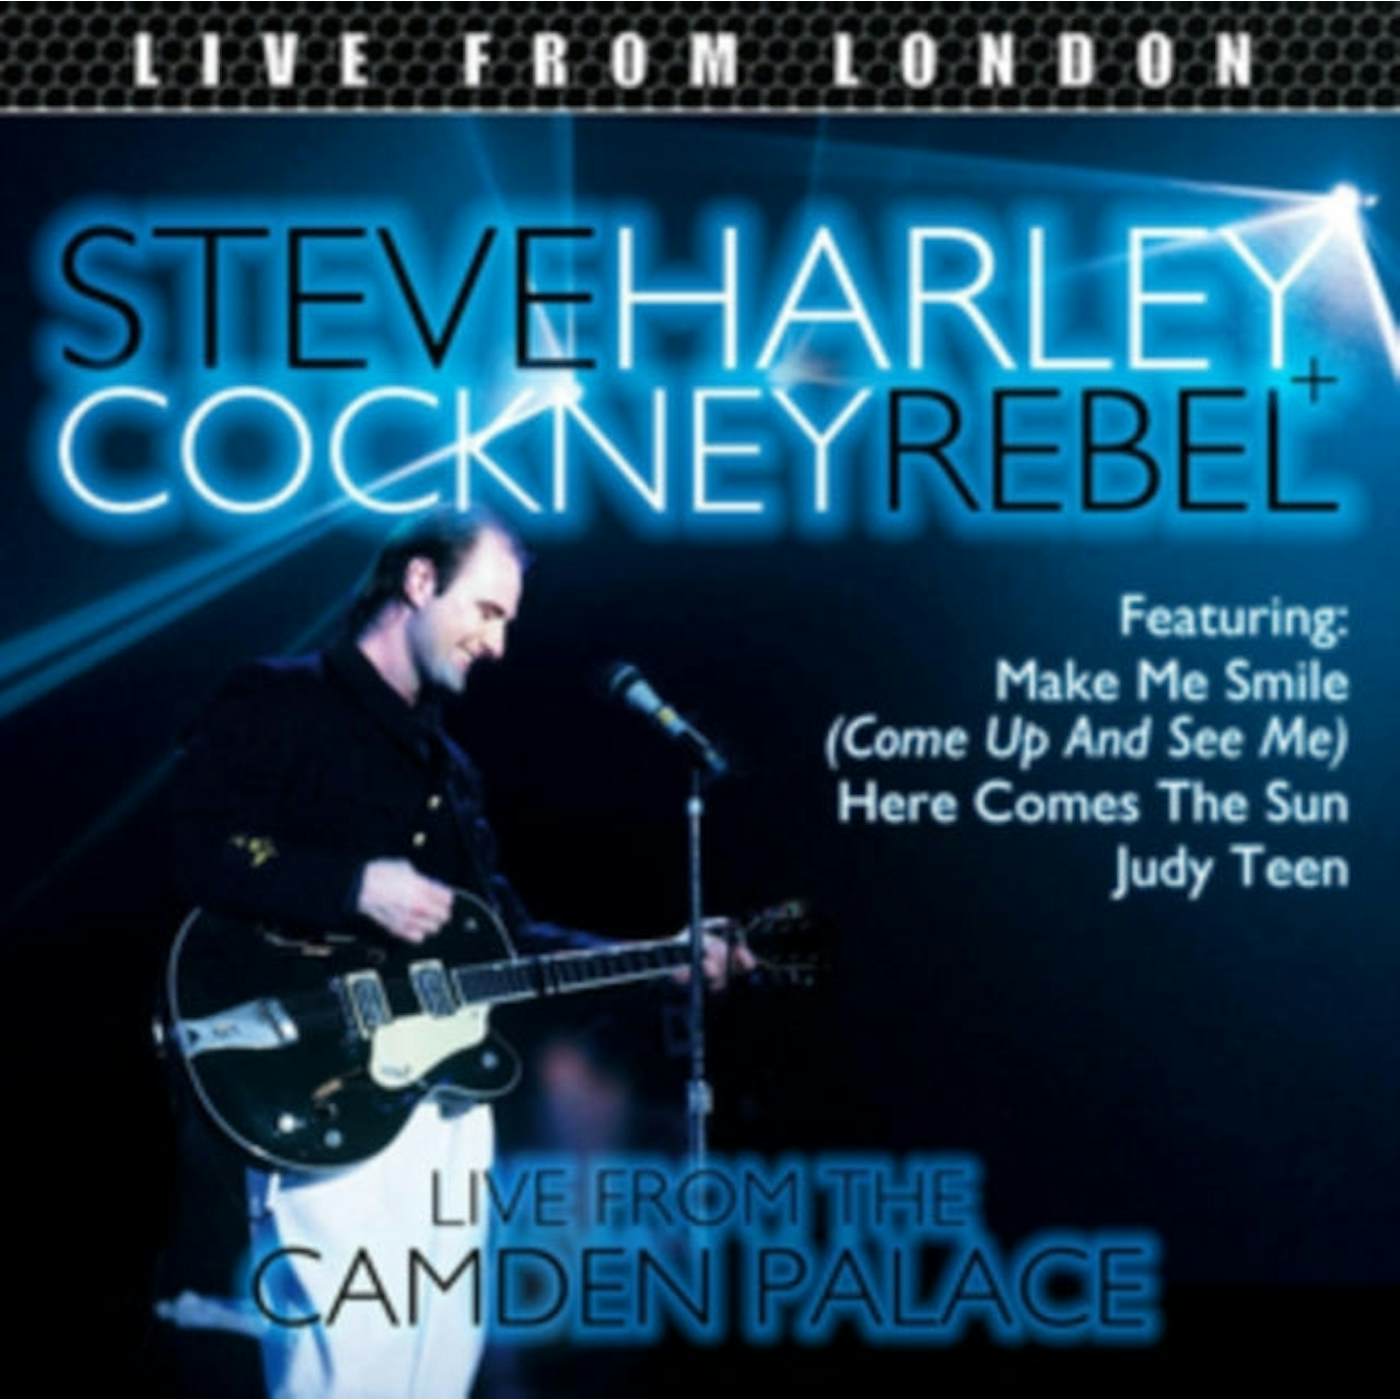 Steve Harley & Cockney Rebel CD - Live From London (Camden Palace)